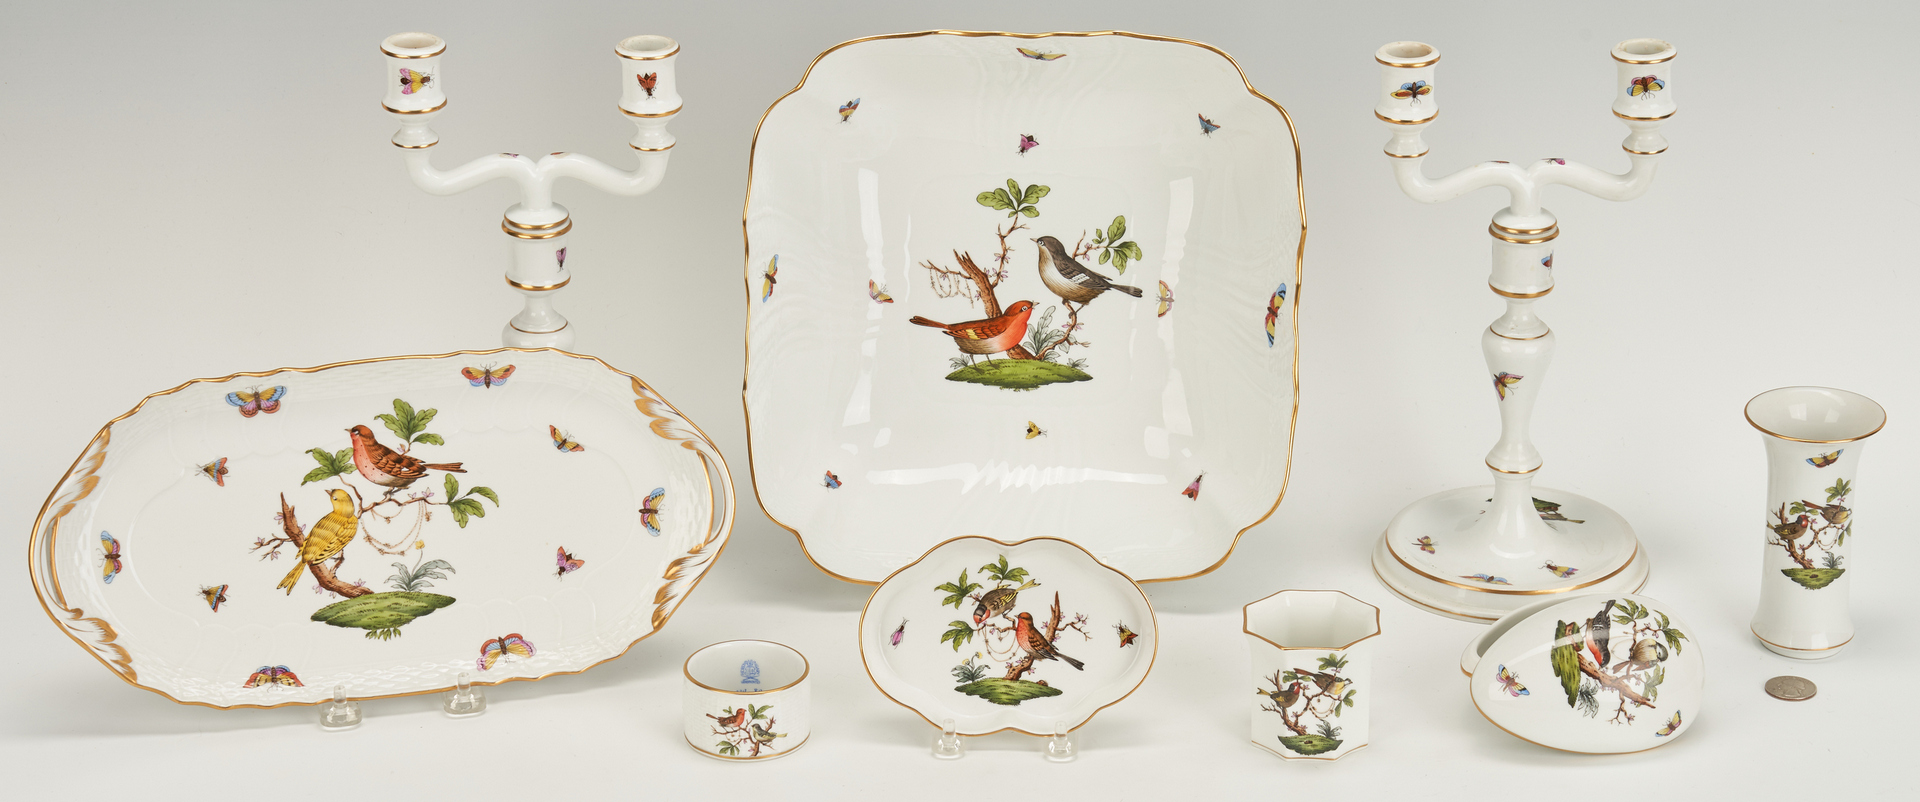 Lot 264: Herend Porcelain Serving Pieces & Accessories, 13 items